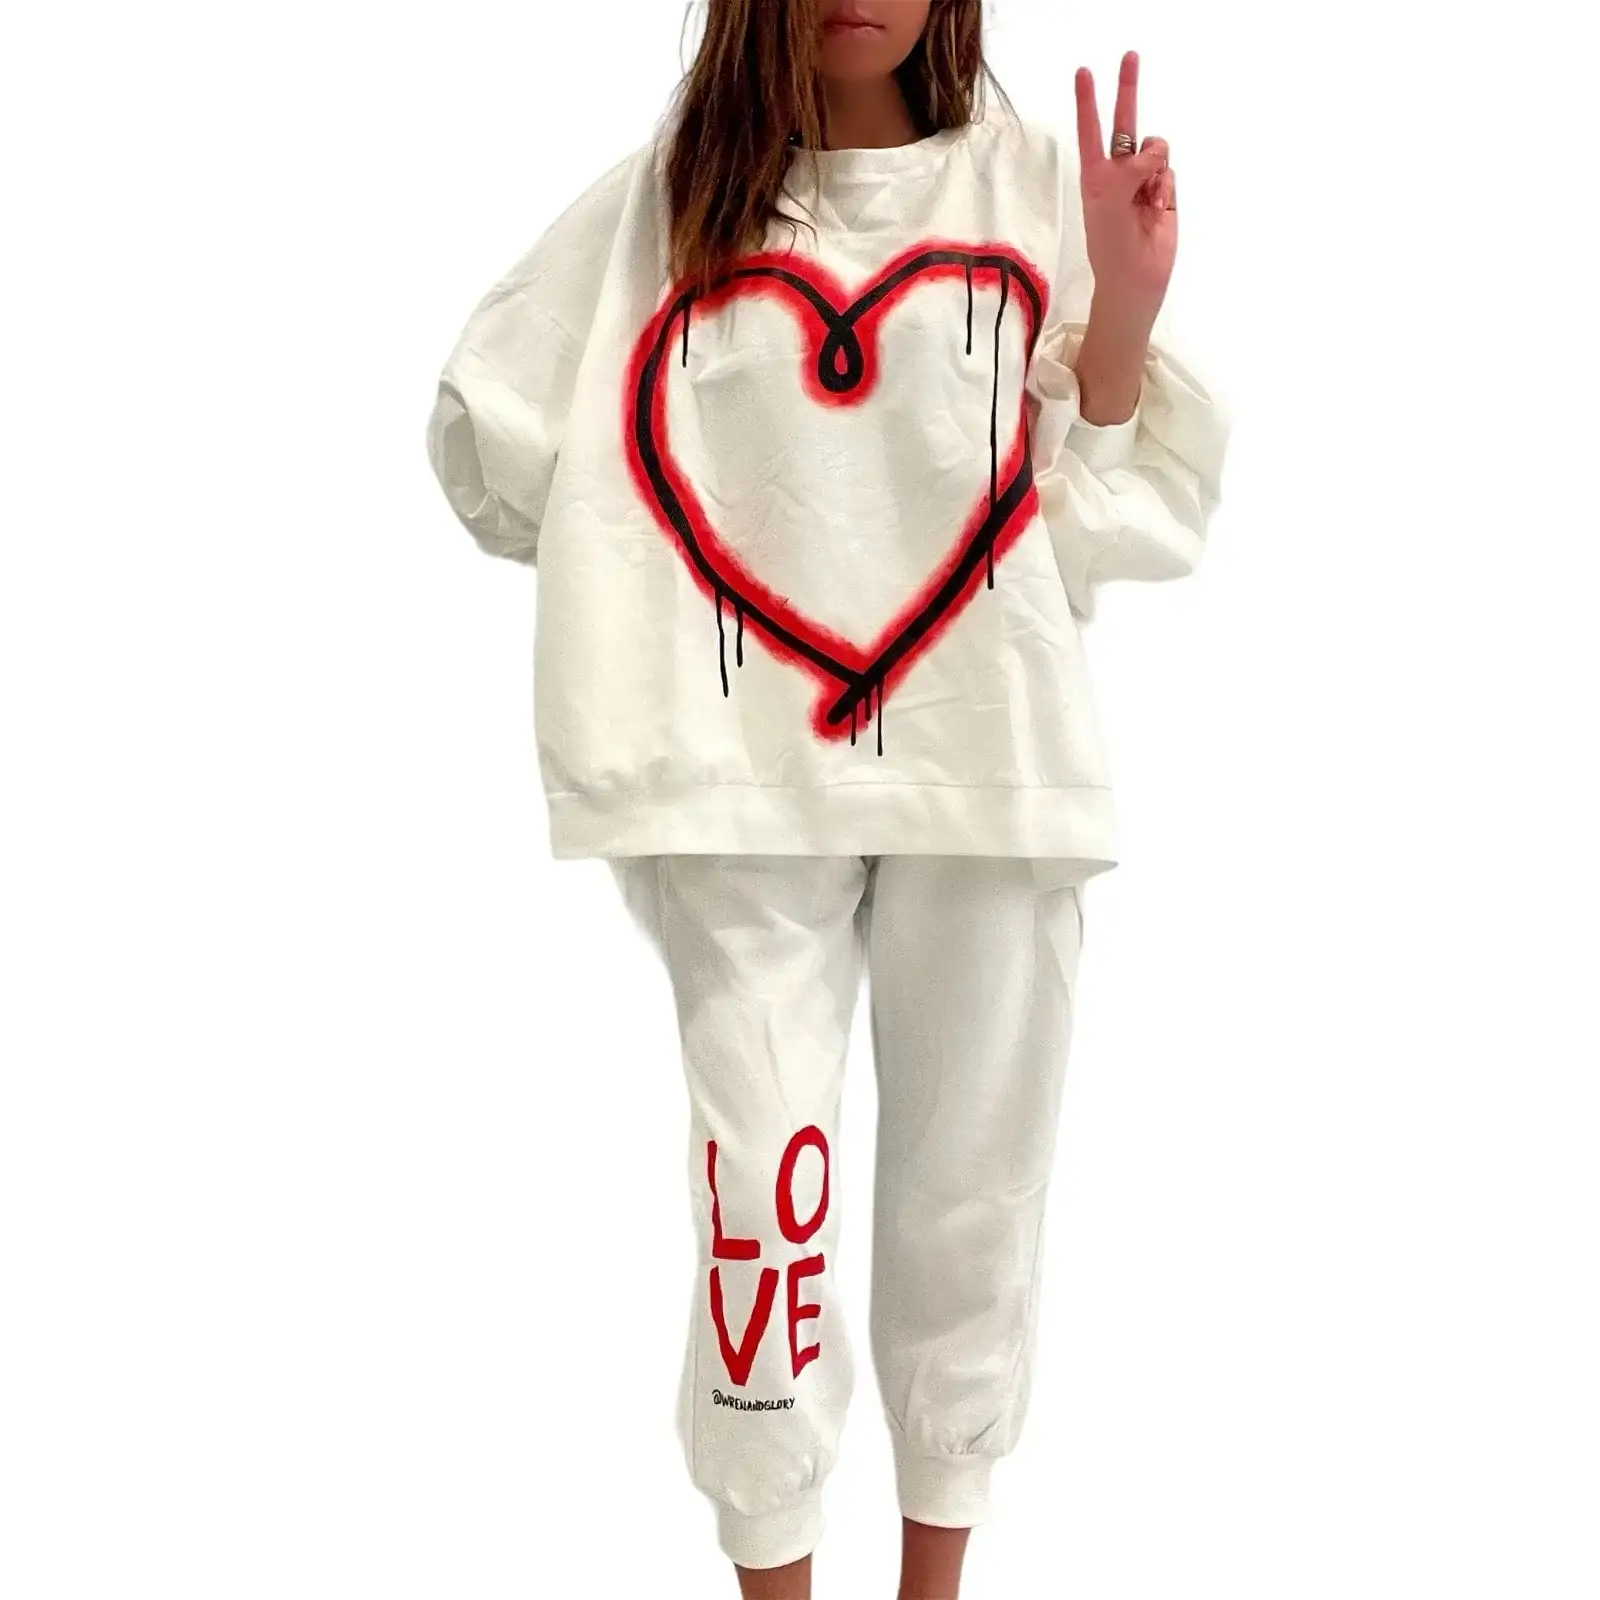 Image of 'Love Love' Painted Sweatshirt (only sweatshirt, not pants)